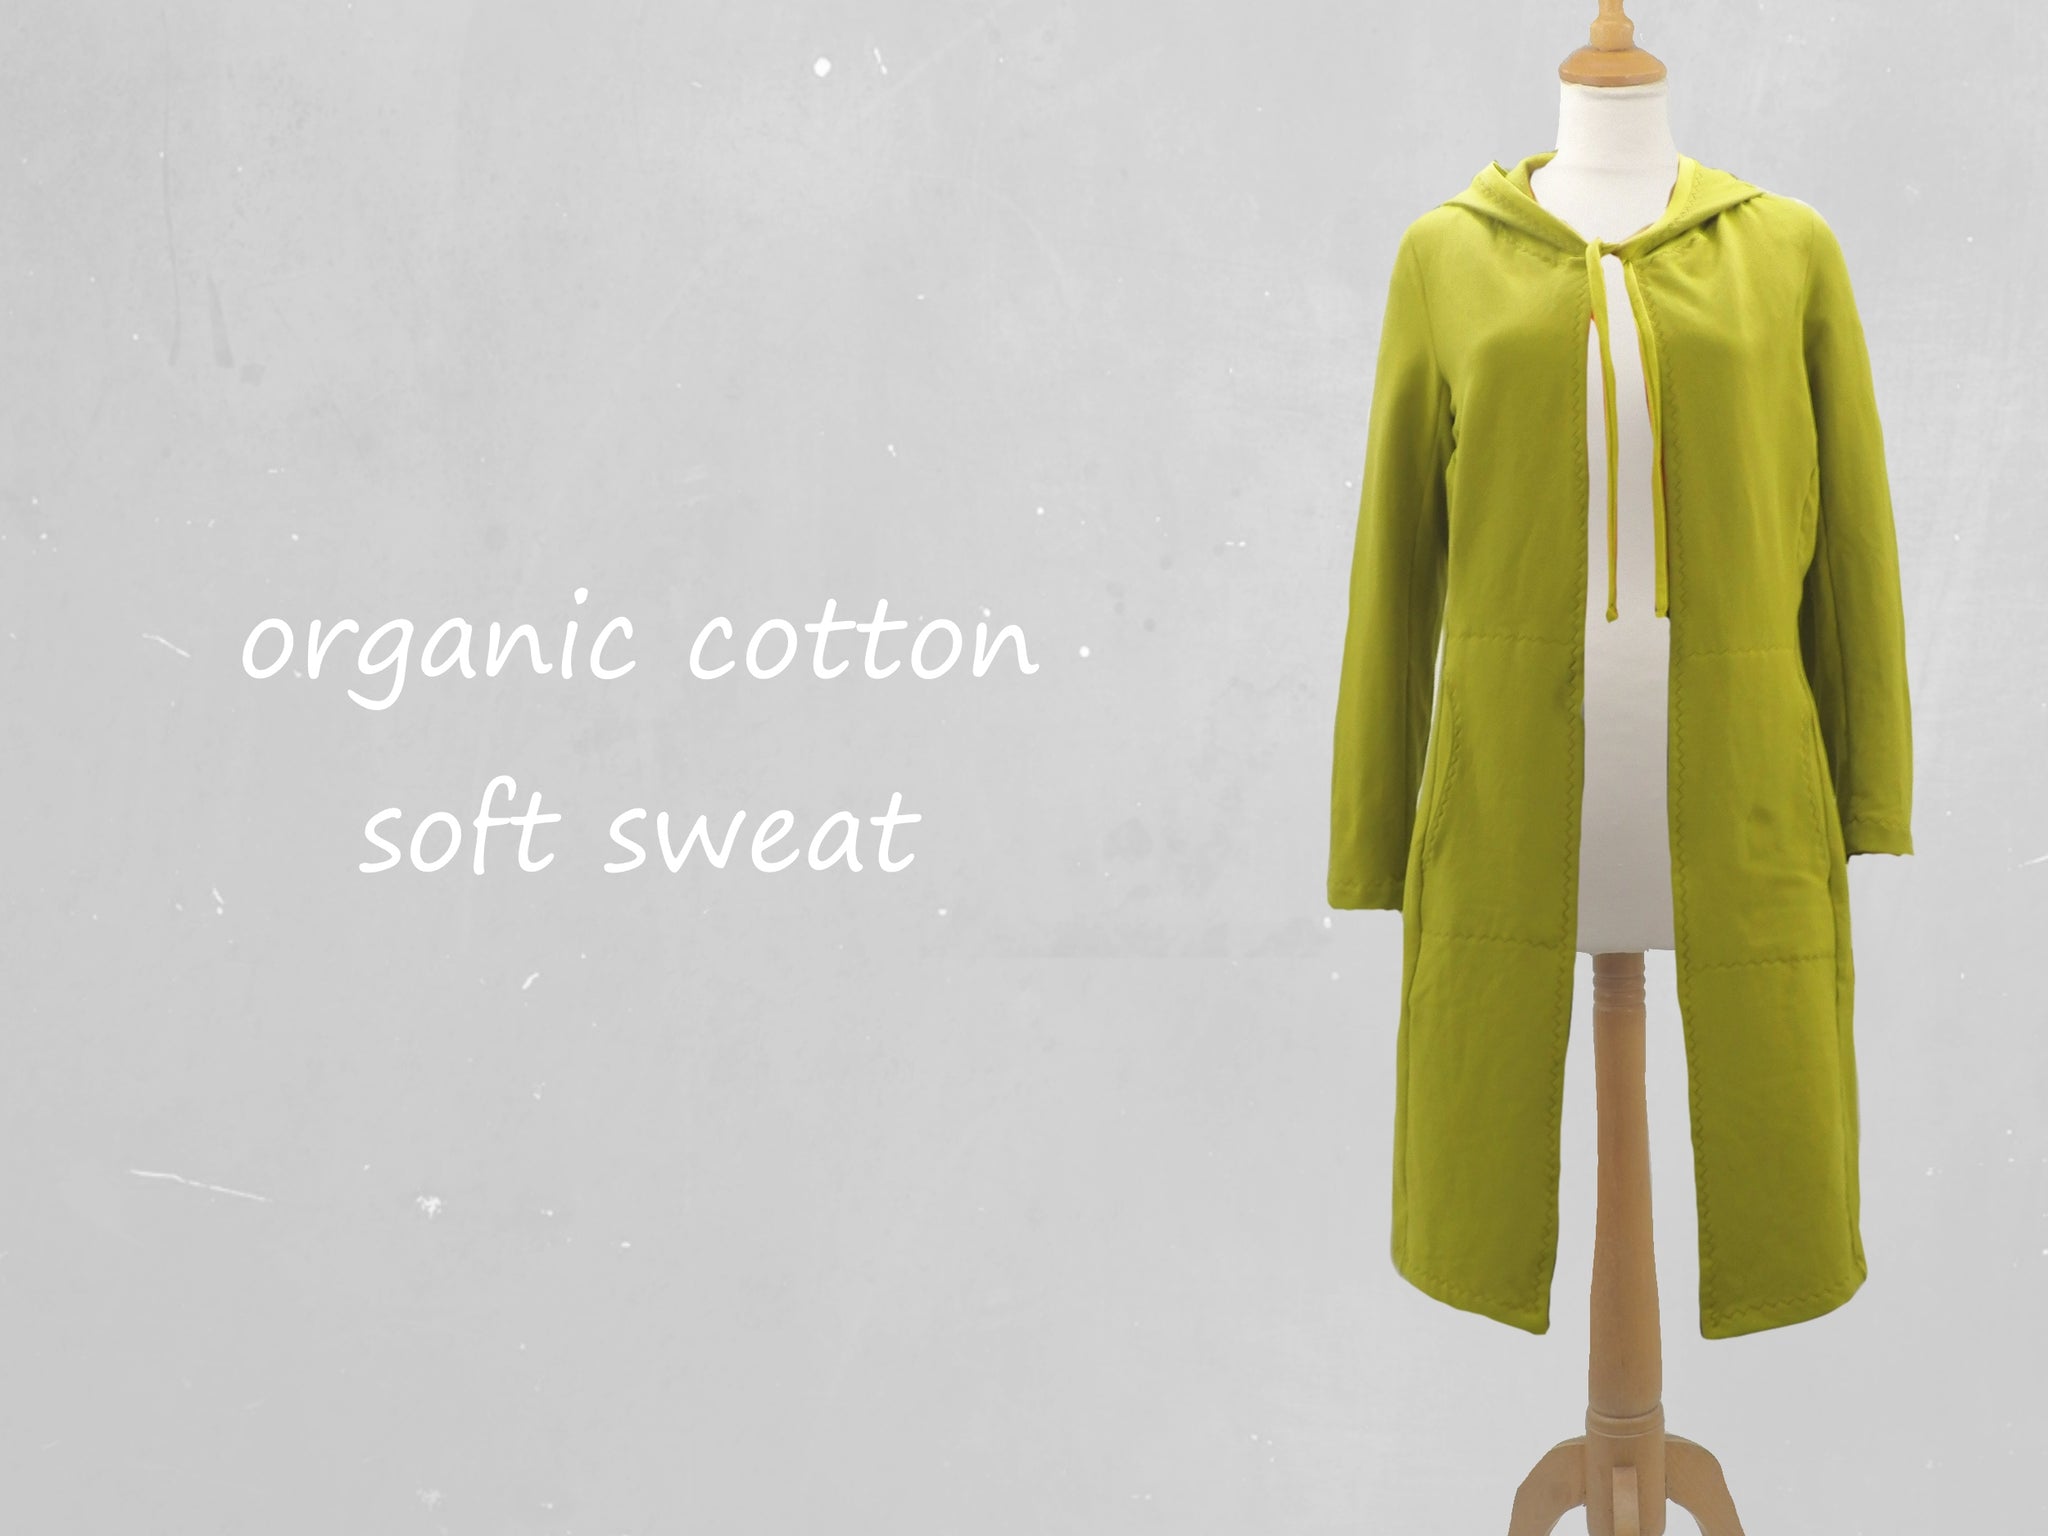 Hooded sweater vest gemaakt van soft sweat bio katoen/ Hooded cardigan made of soft brushed organic cotton